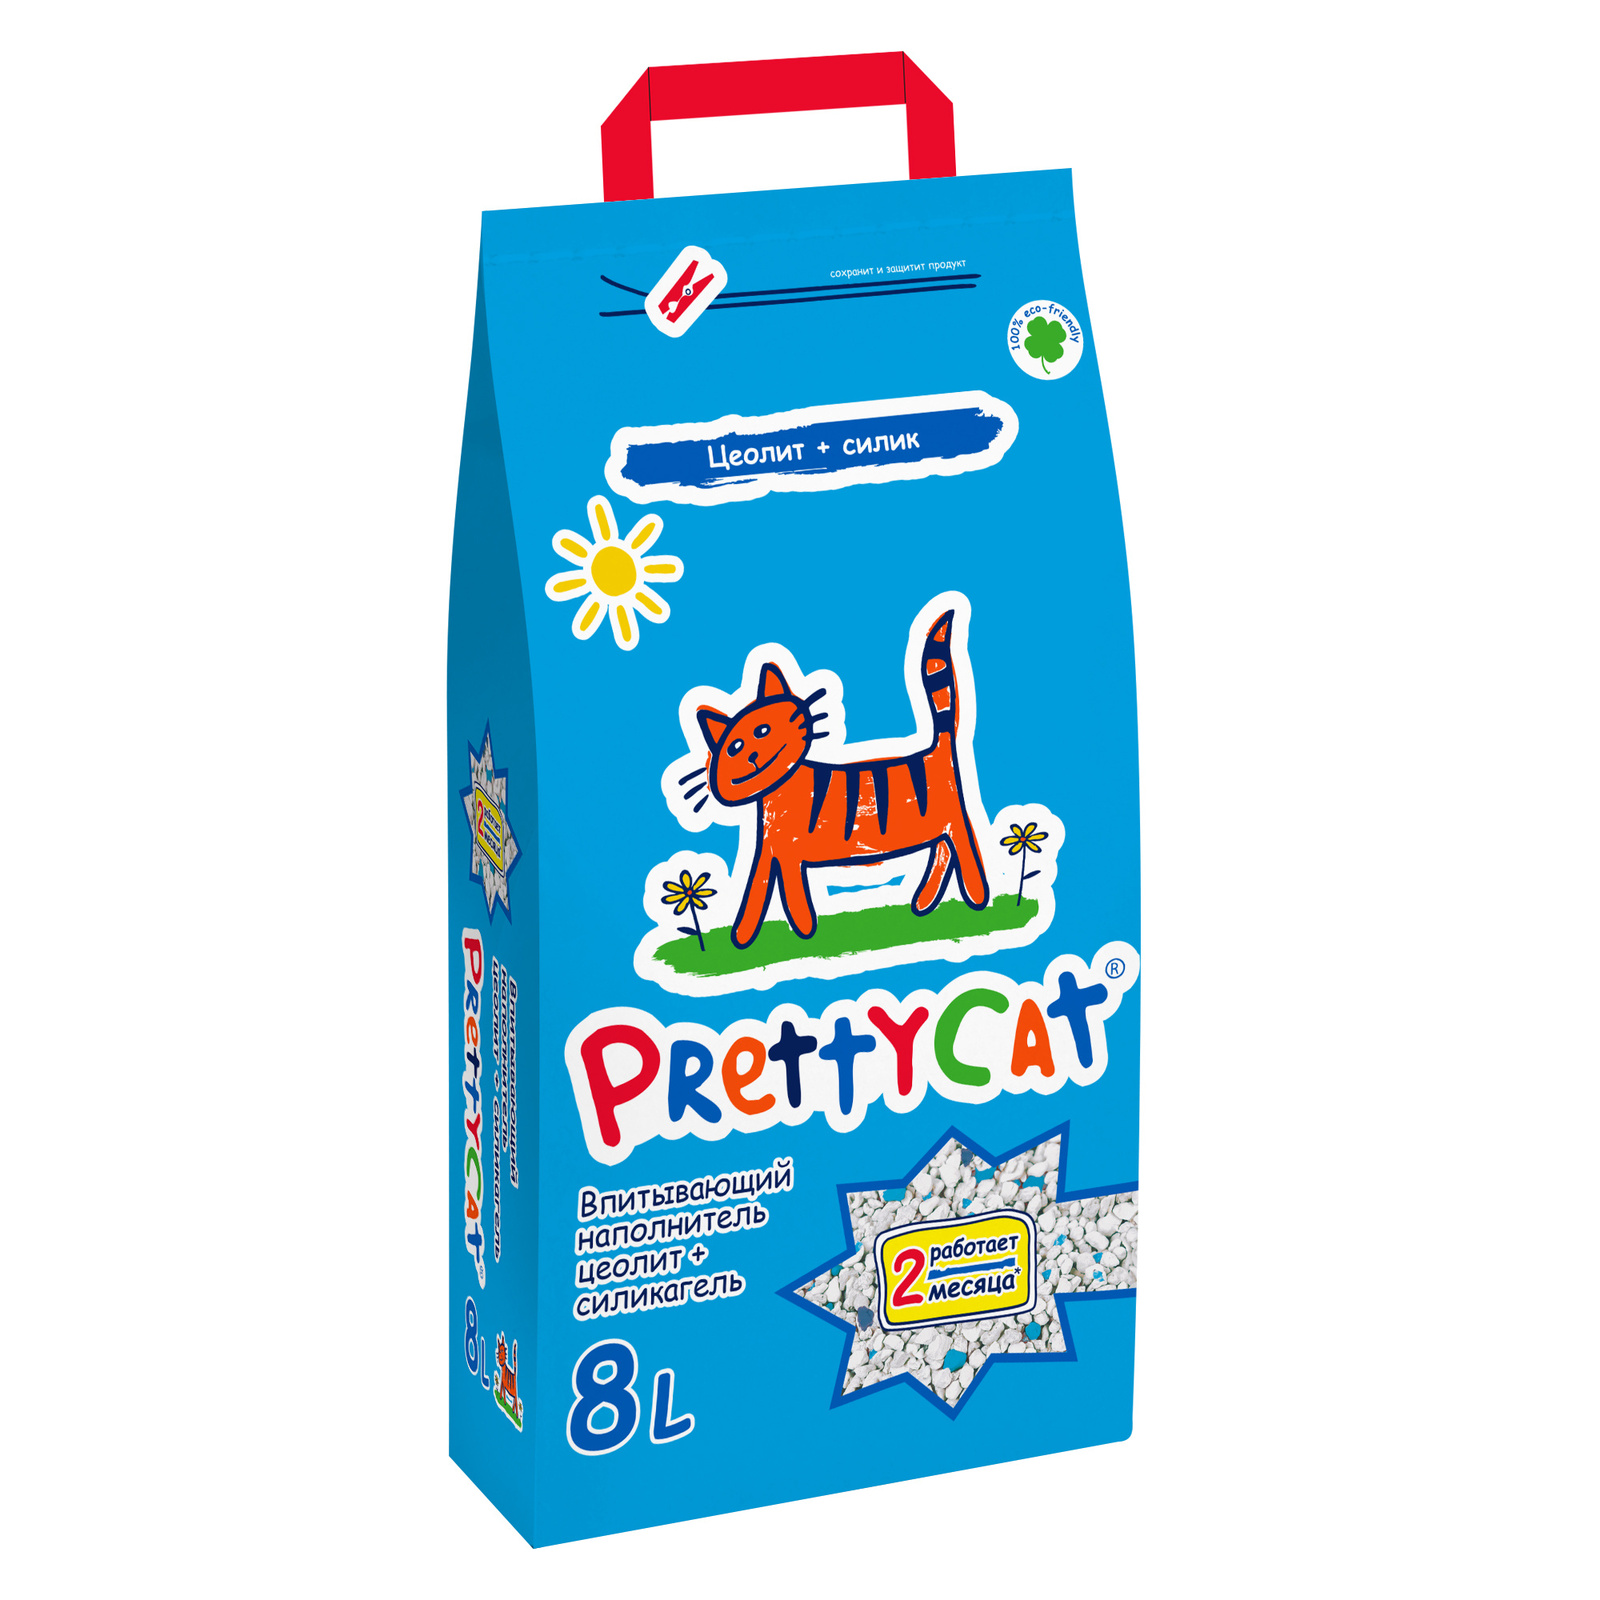 PrettyCat PrettyCat наполнитель впитывающий для кошачьих туалетов (4 кг) цена